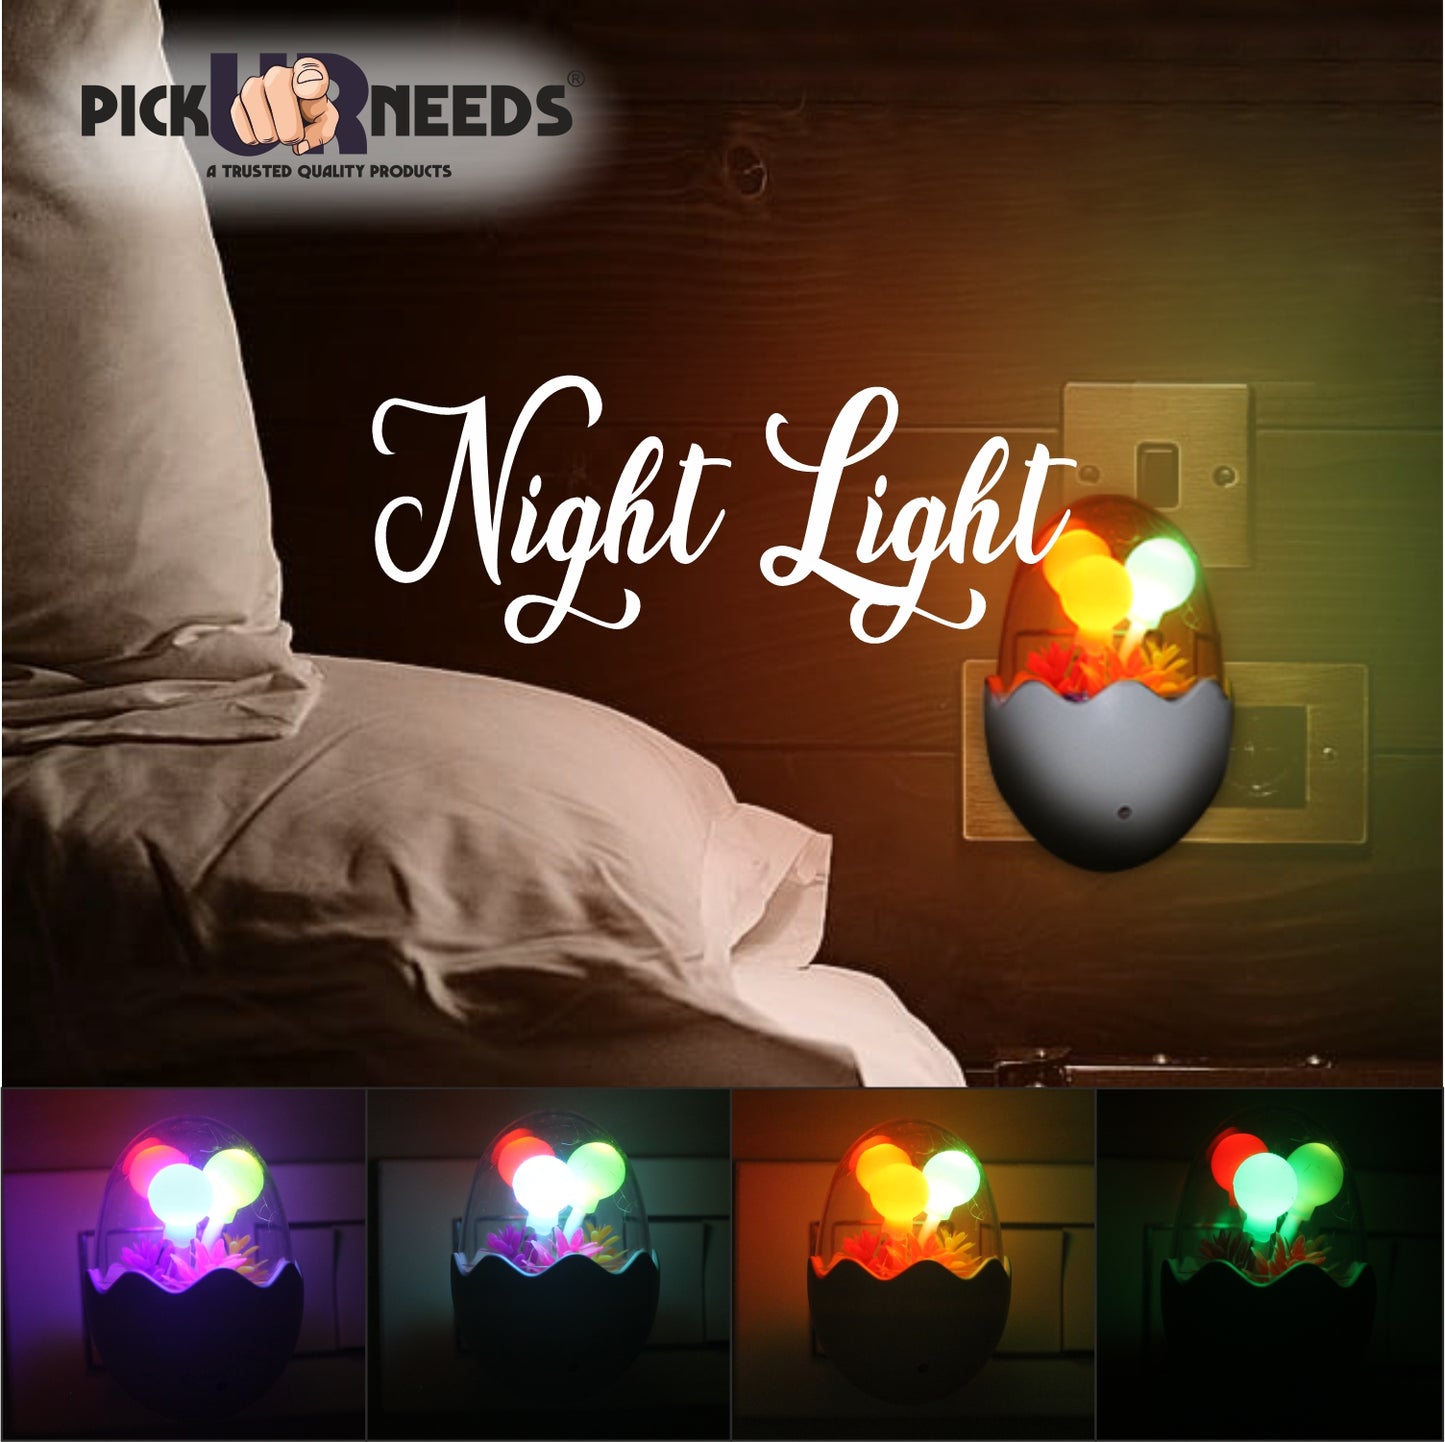 Pick Ur Needs Sensor LED Auto On/Off Colour Changing Night Light Oval Shape Lamp Plug-in